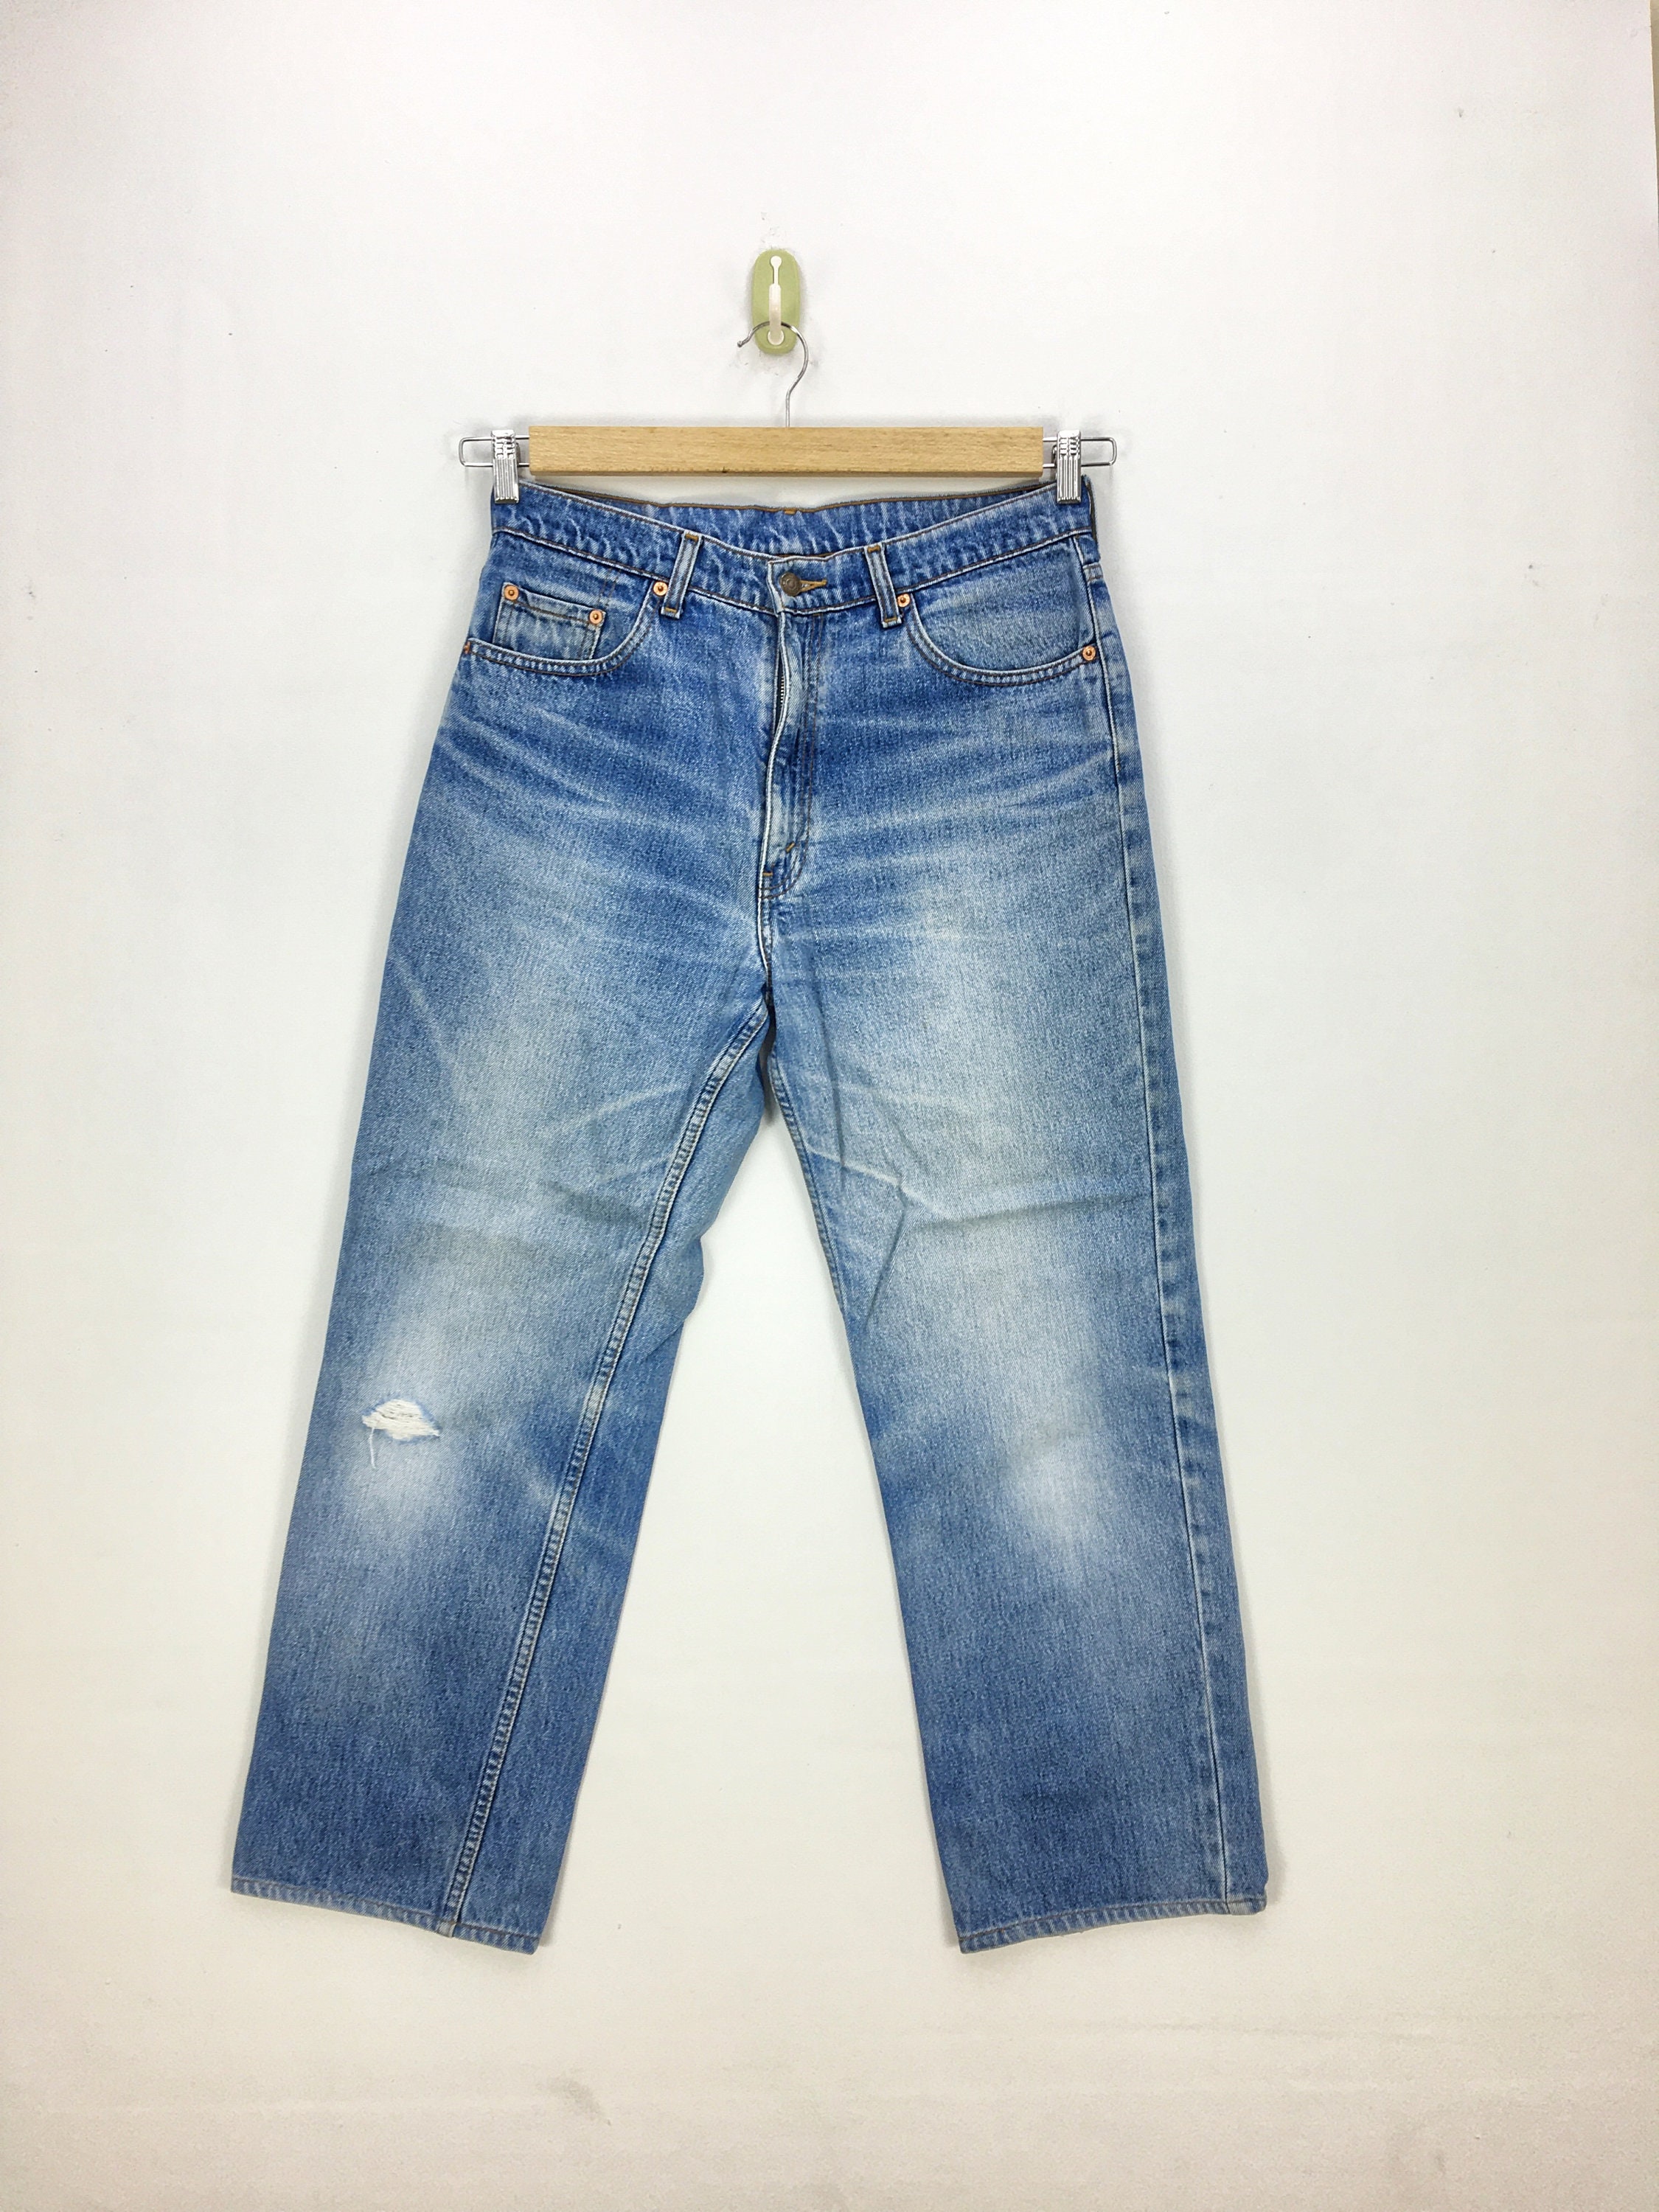 Buy W32 L27 Vintage Levis 515 Jeans Pants Levi's 515 Online in India - Etsy